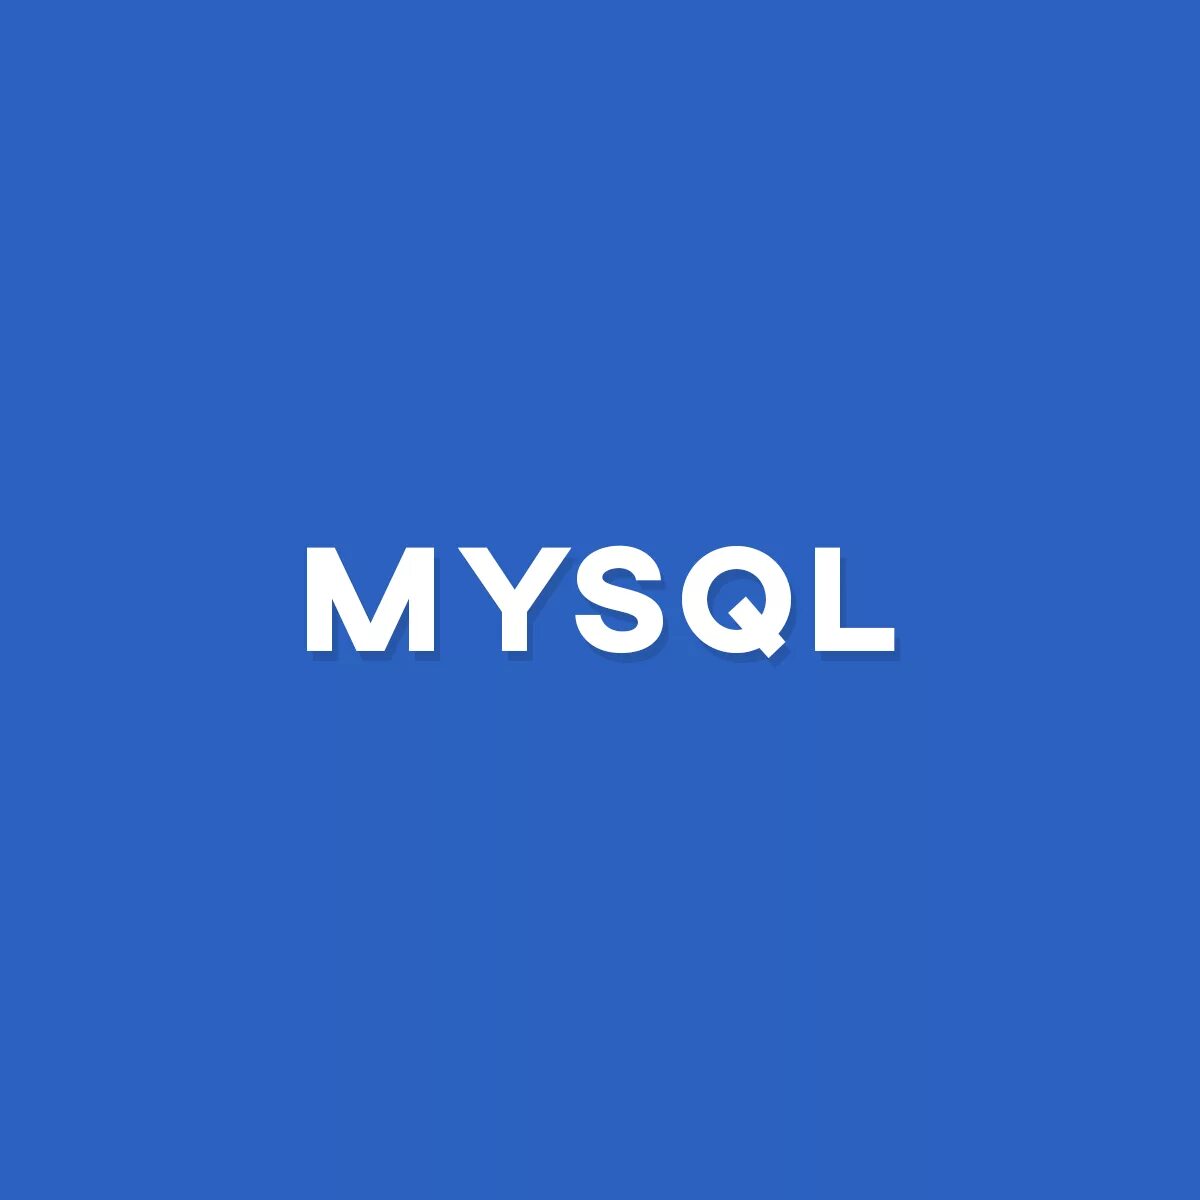 MYSQL. Значок MYSQL. Май SQL. MYSQL картинки для презентации. Mysql2